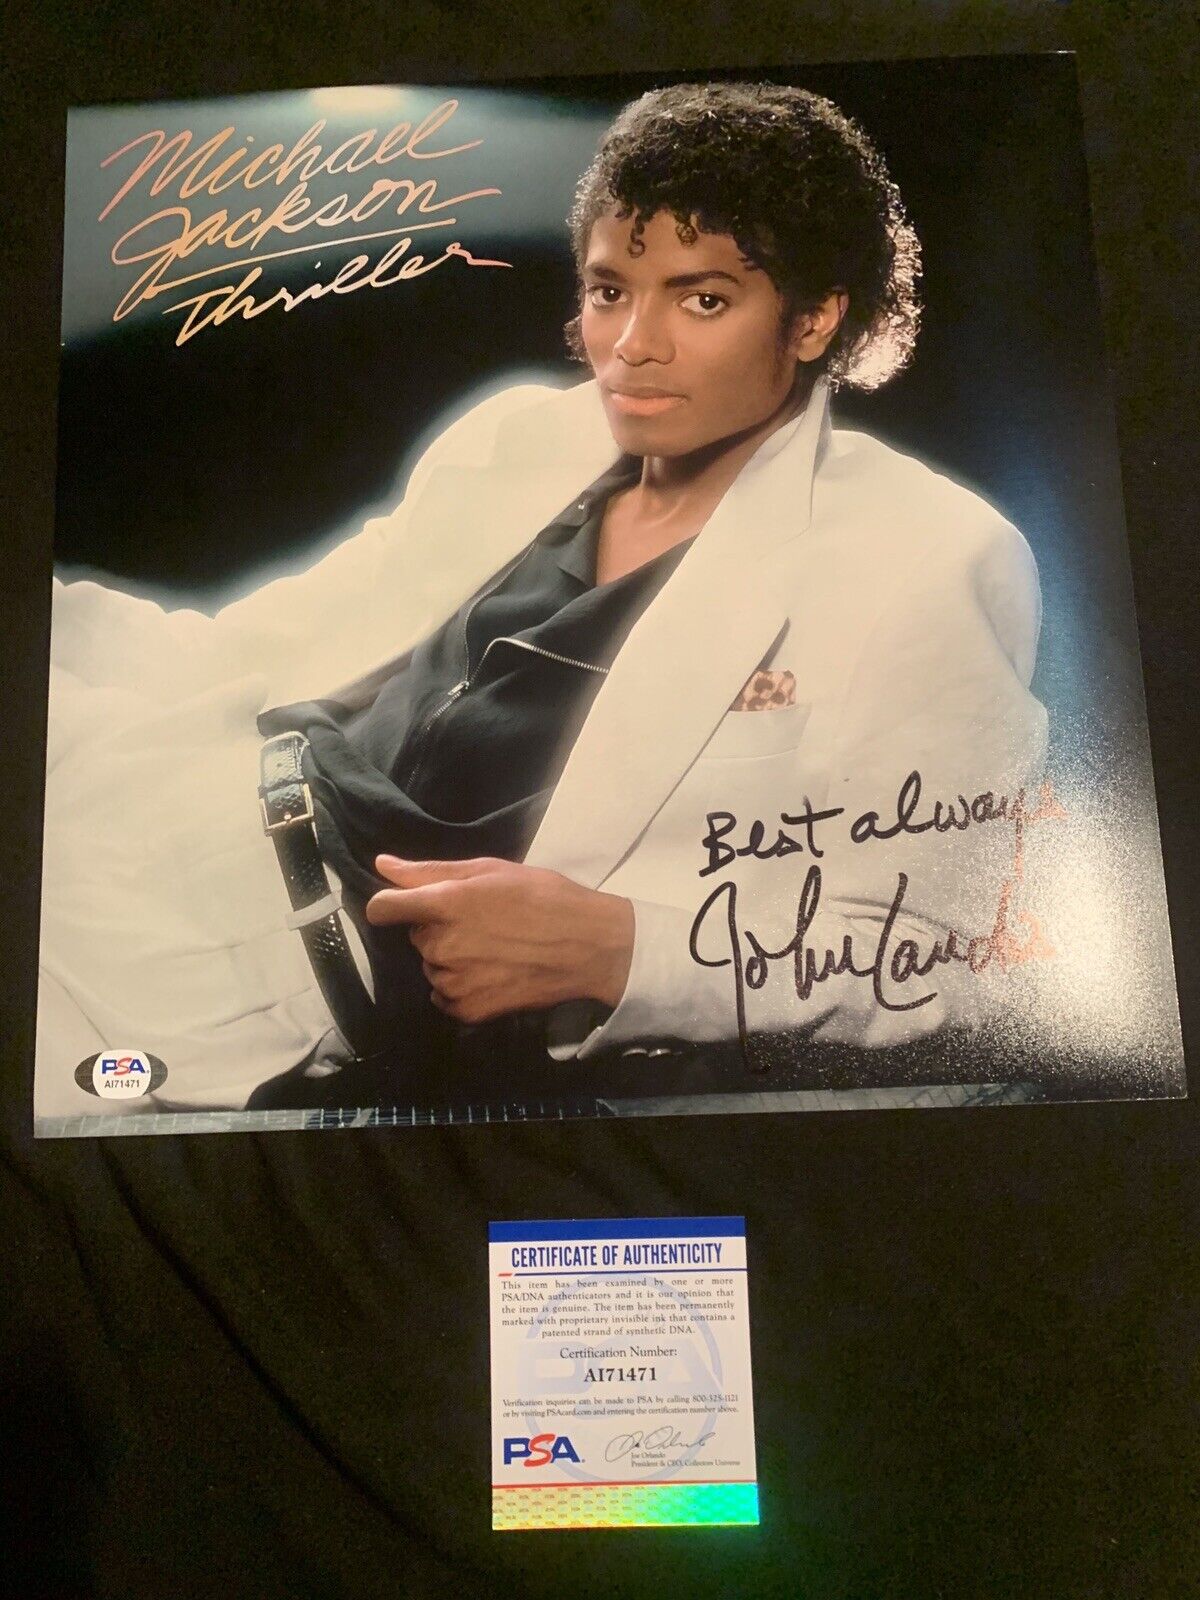 john landis signed 12x12 Photo Poster painting Of Michael Jackson Thriller Album Cover Psa Coa